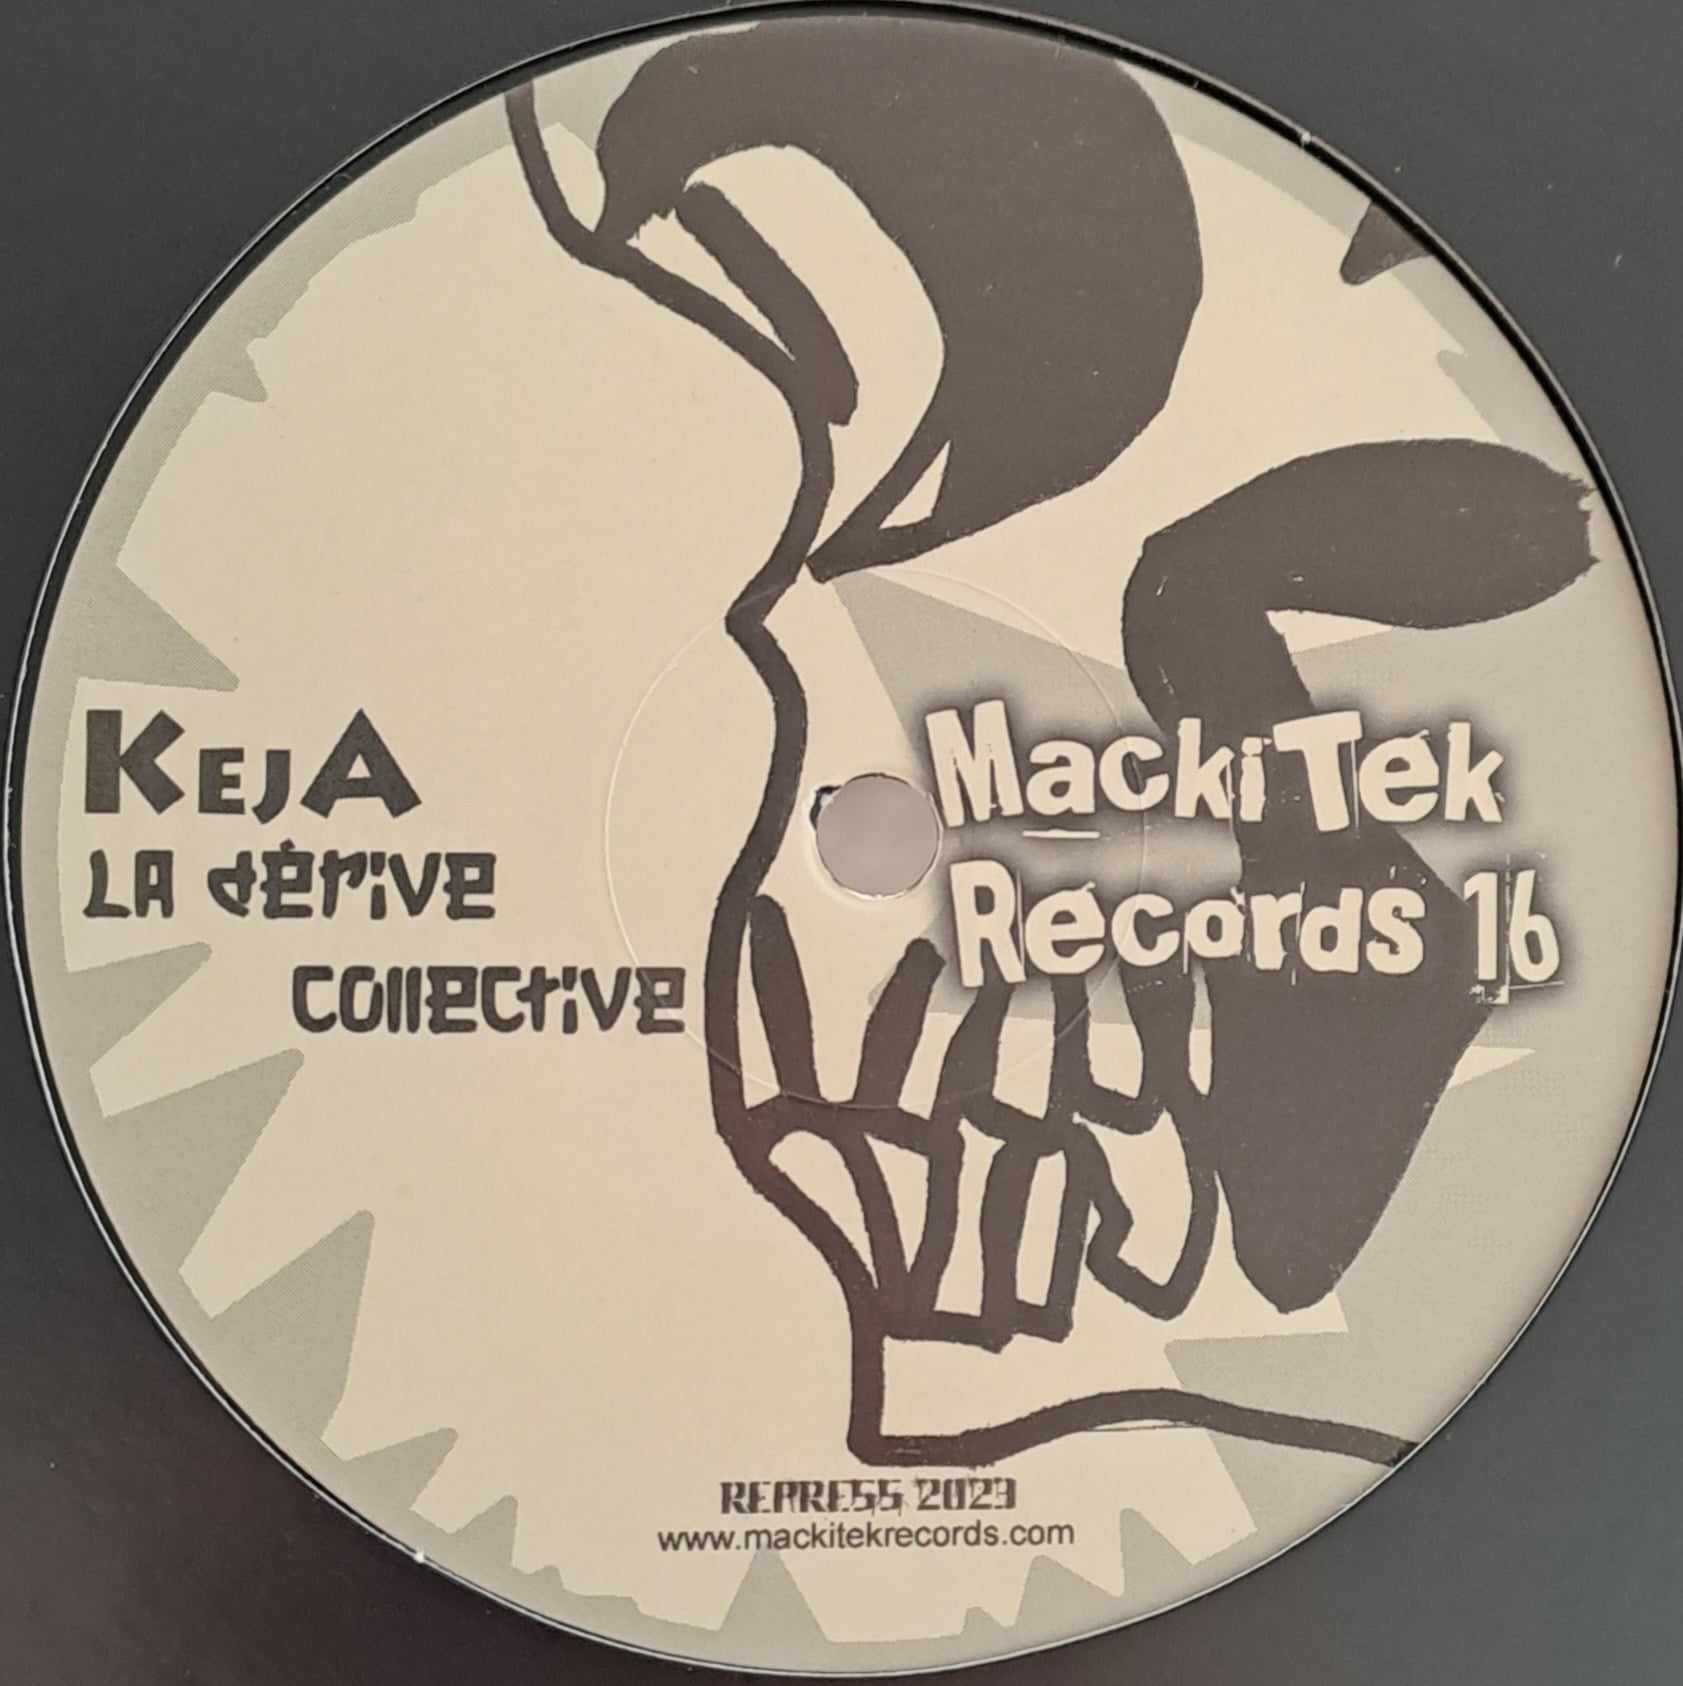 Mackitek 16 V2 RP (toute dernière copie en stock) - vinyle freetekno